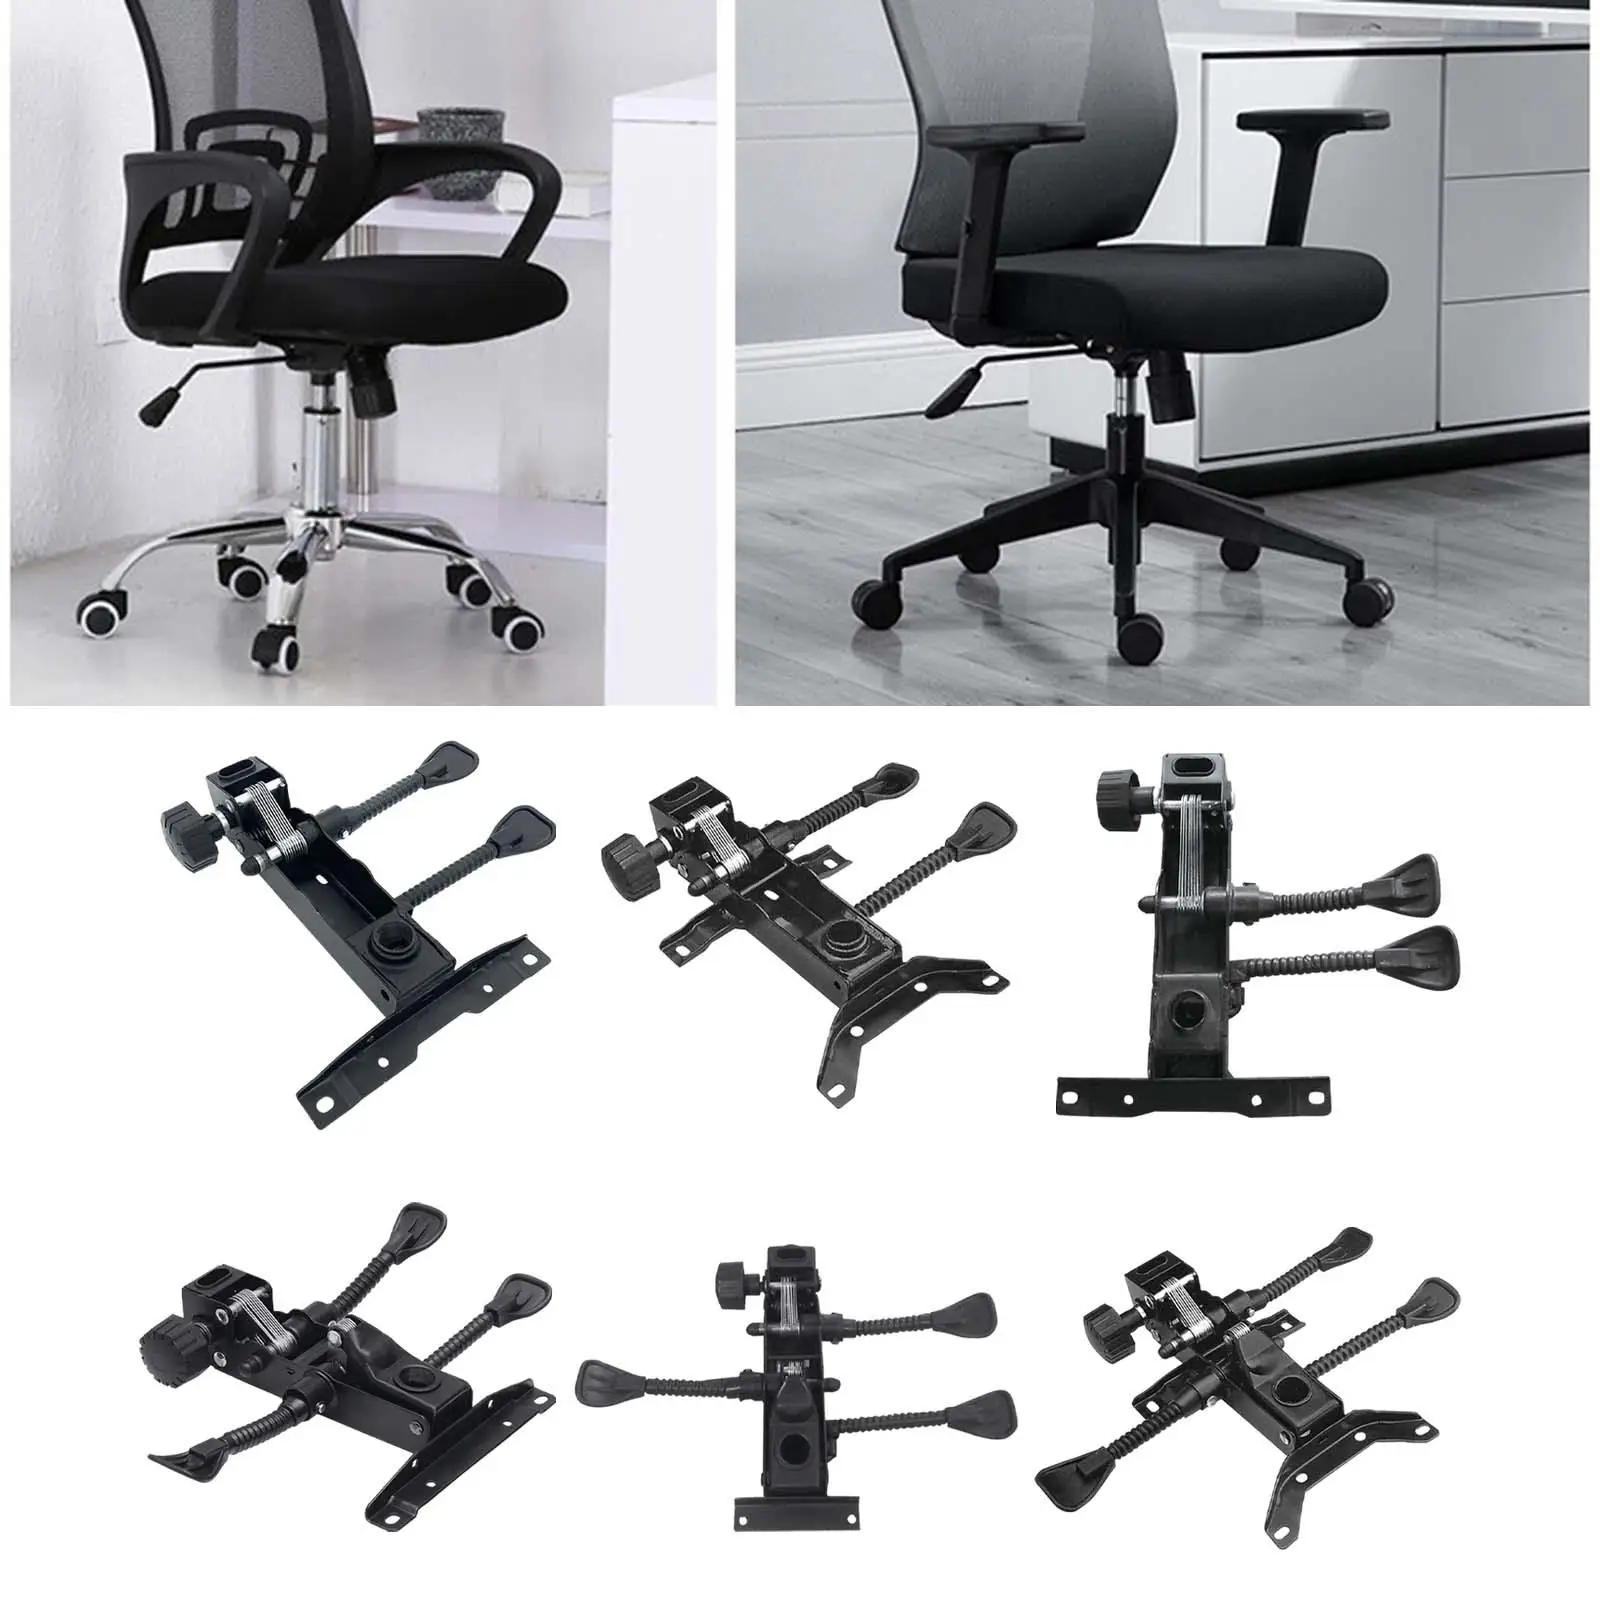 Swivel Tilt Control Seat Mechanism Chair Adjustable Mechanism Swivel Chair Base for Mesh Chair Office Chairs Furniture Bar Stool